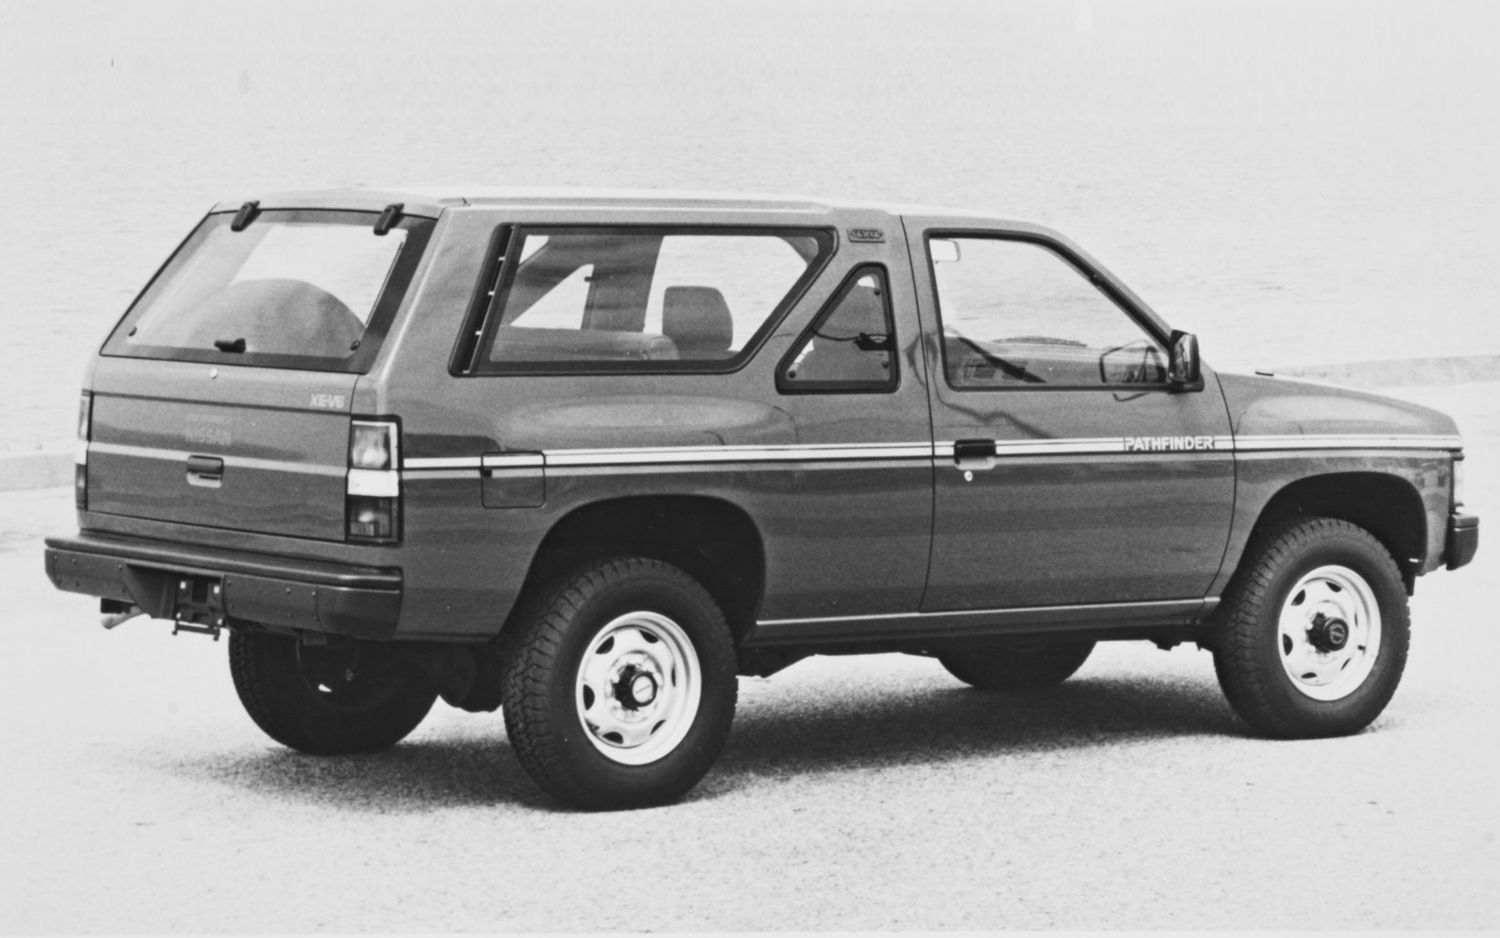 First-Generation-1987-Nissan-Pathfinder-rear_zps08b222e4.jpg